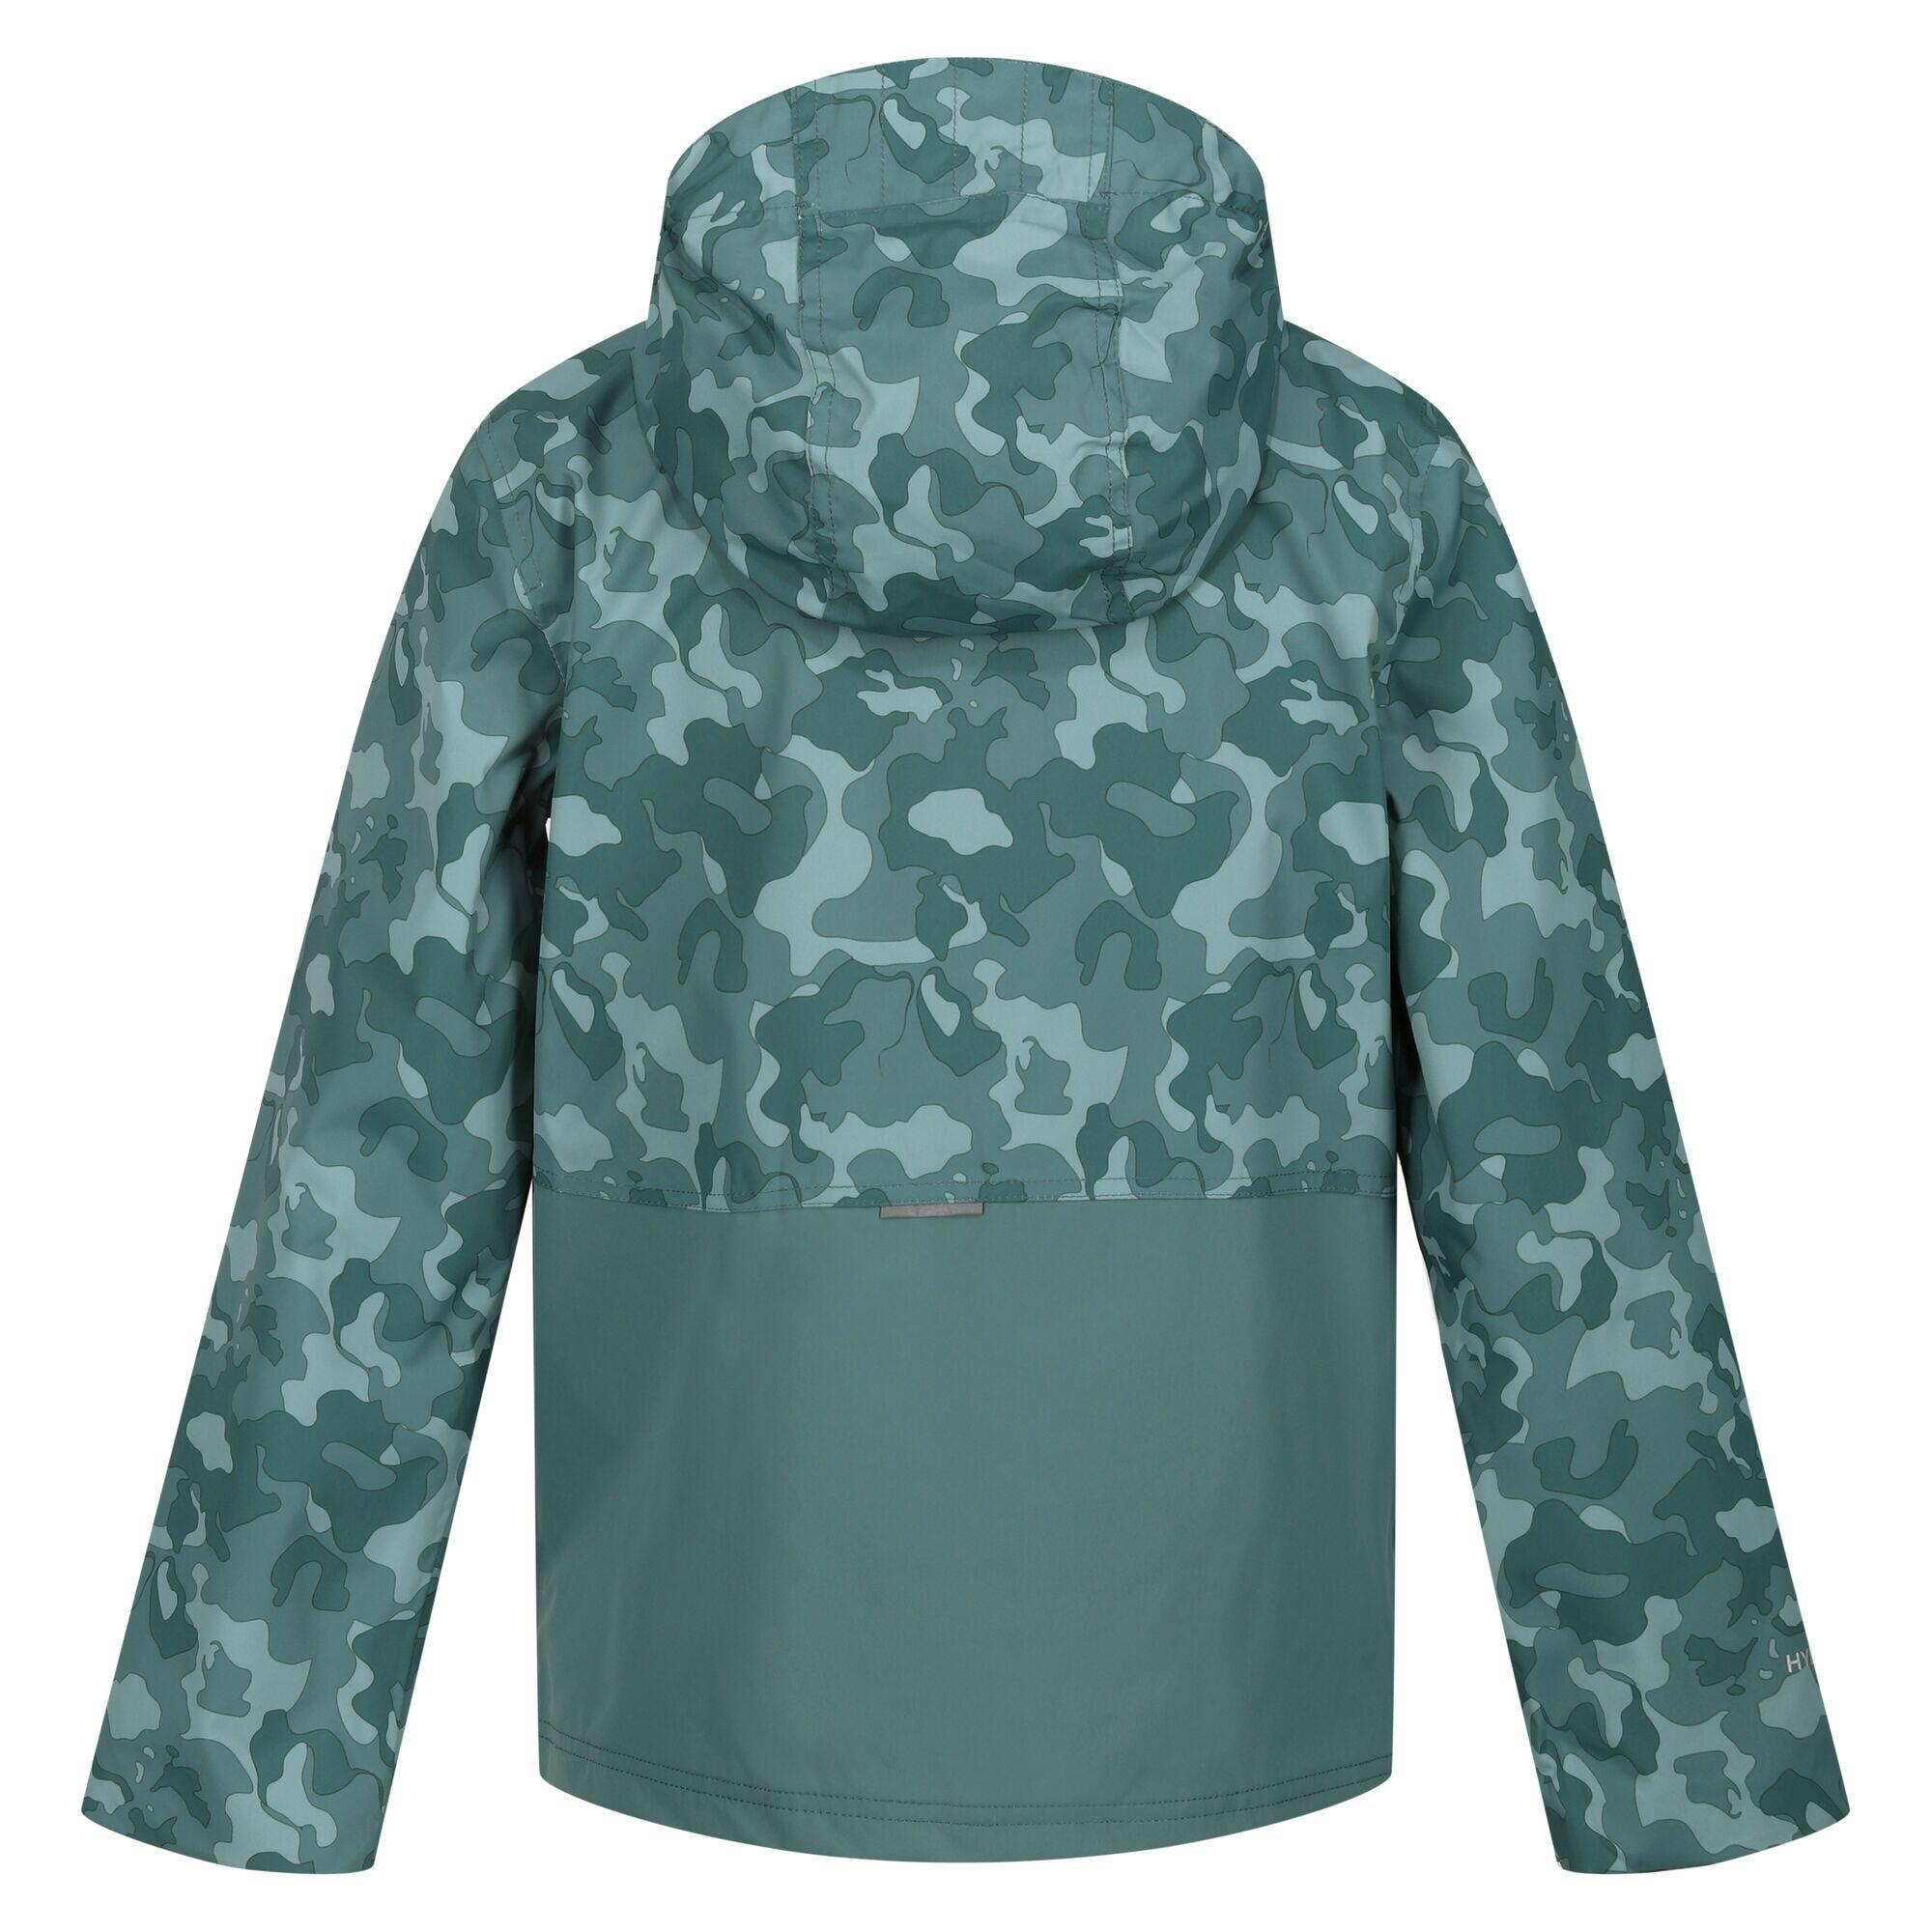 Childrens/Kids Hywell Camouflage Waterproof Jacket (Sea Pine) 2/5